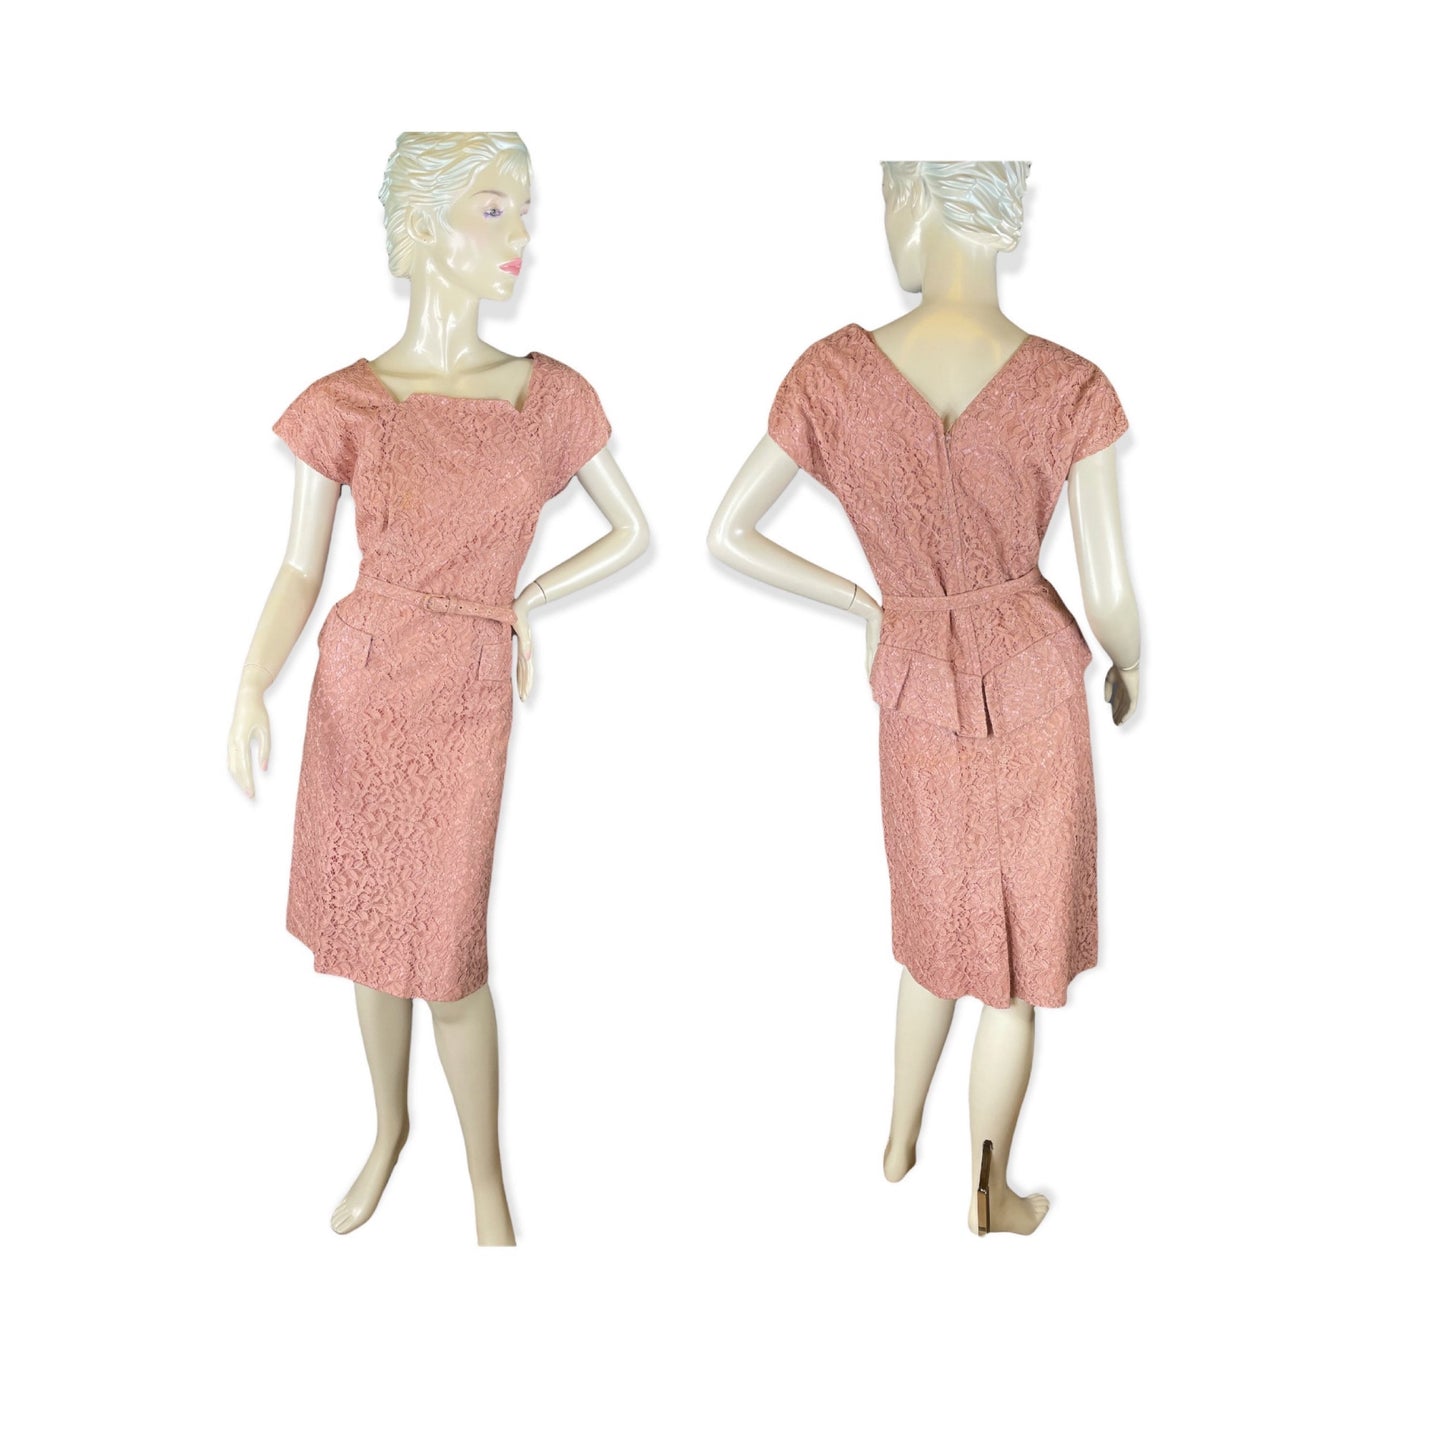 1950s Chantilly lace peplum dress in mauve pink by Joe Richman Size L